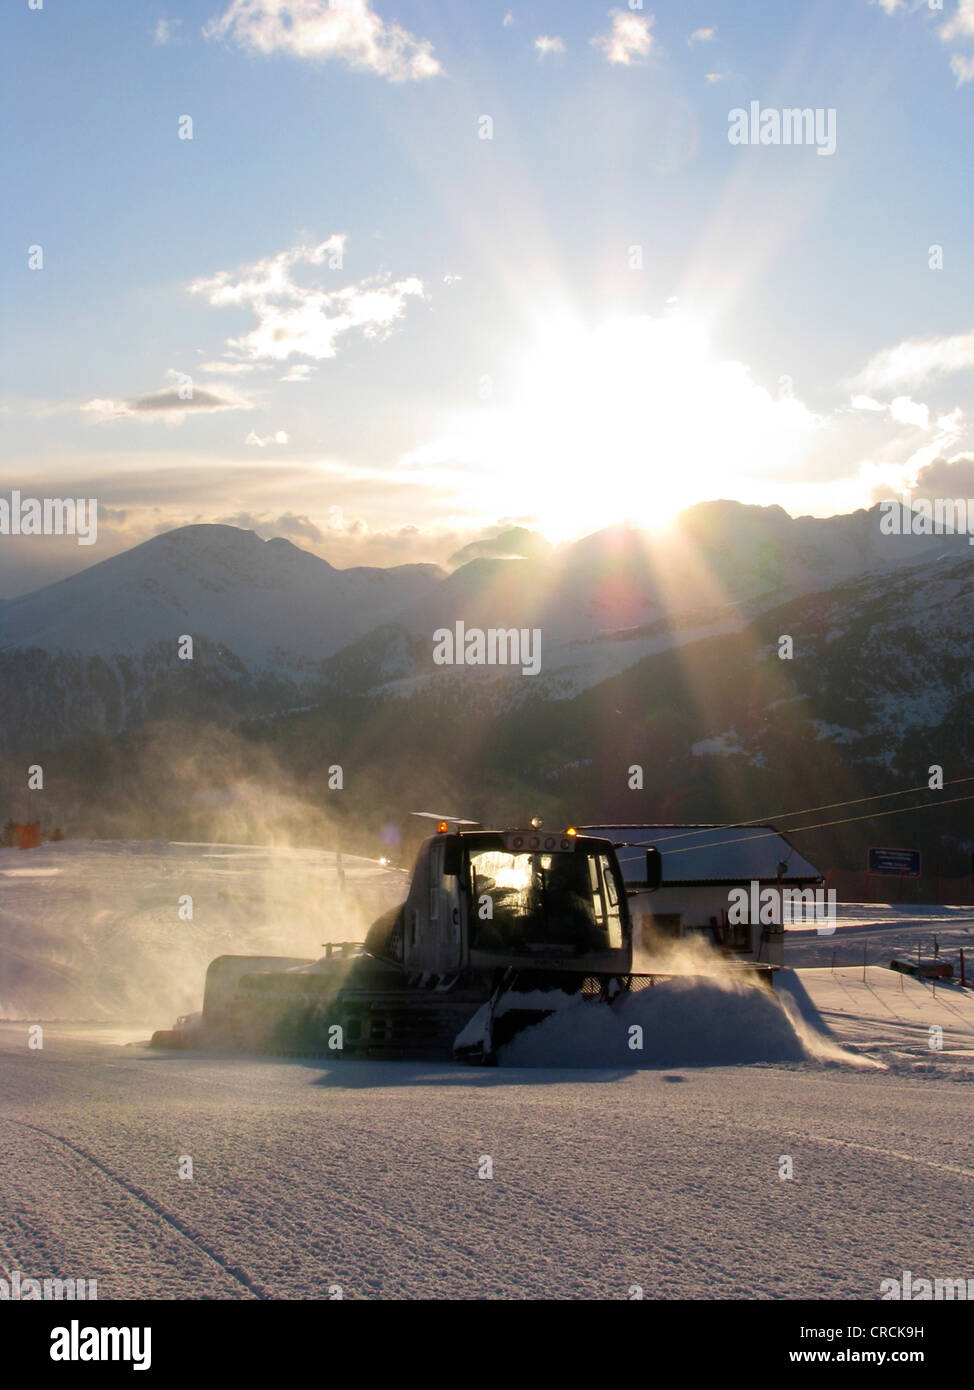 Snow Cat in snowy mountain scenery of a skiing area preparing piste in the evening sun, Italy, Suedtirol, Sarntal, Sarentino, Reinswald Stock Photo